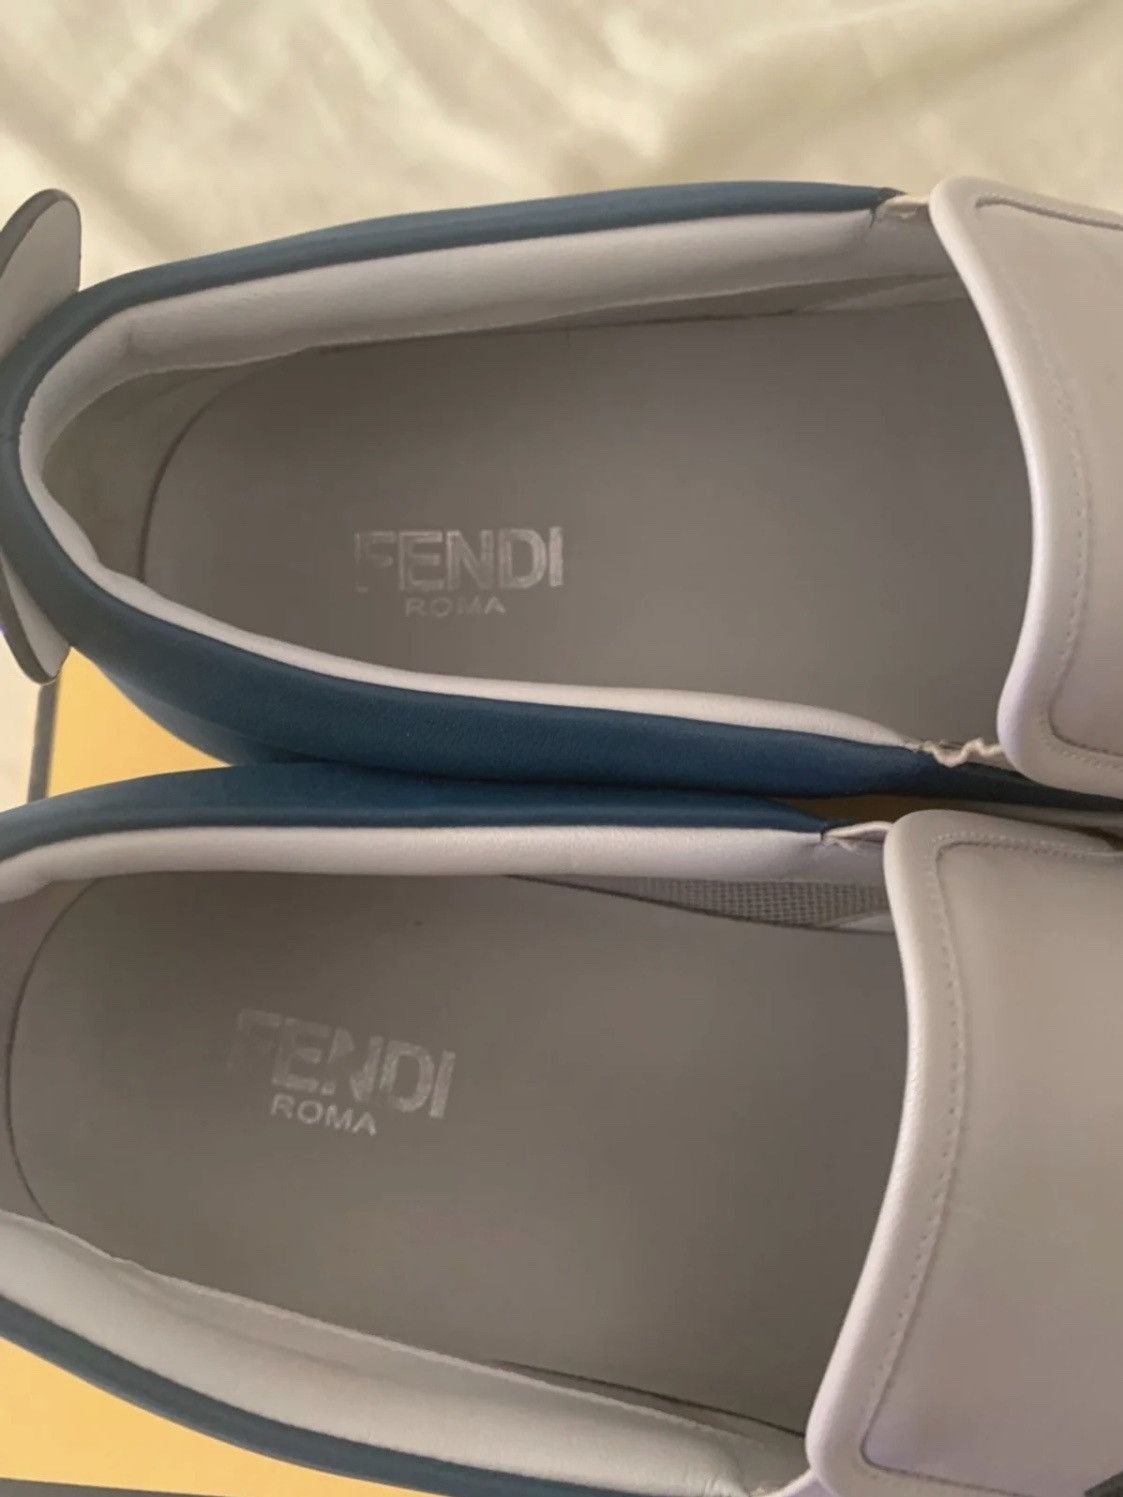 Fendi Fendi Shoes Size US 10 / EU 43 - 3 Thumbnail